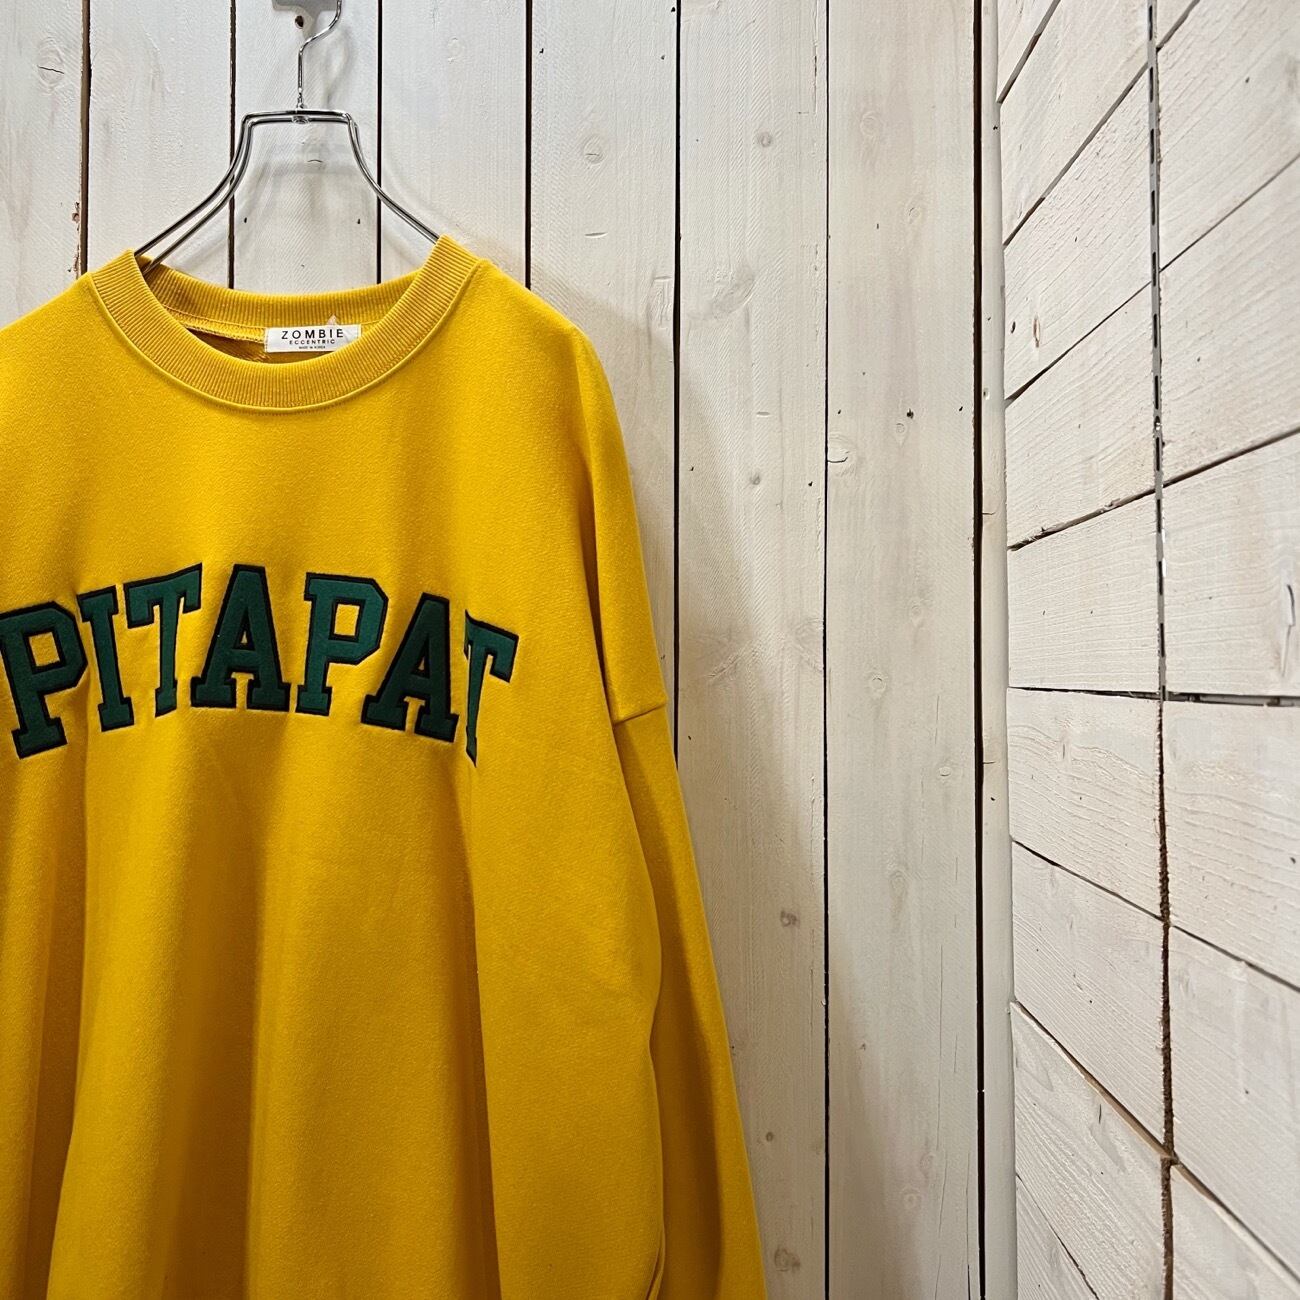 221852-7】PITAPAT logo embroidered crew neck sweatshirt / PITAPAT ...